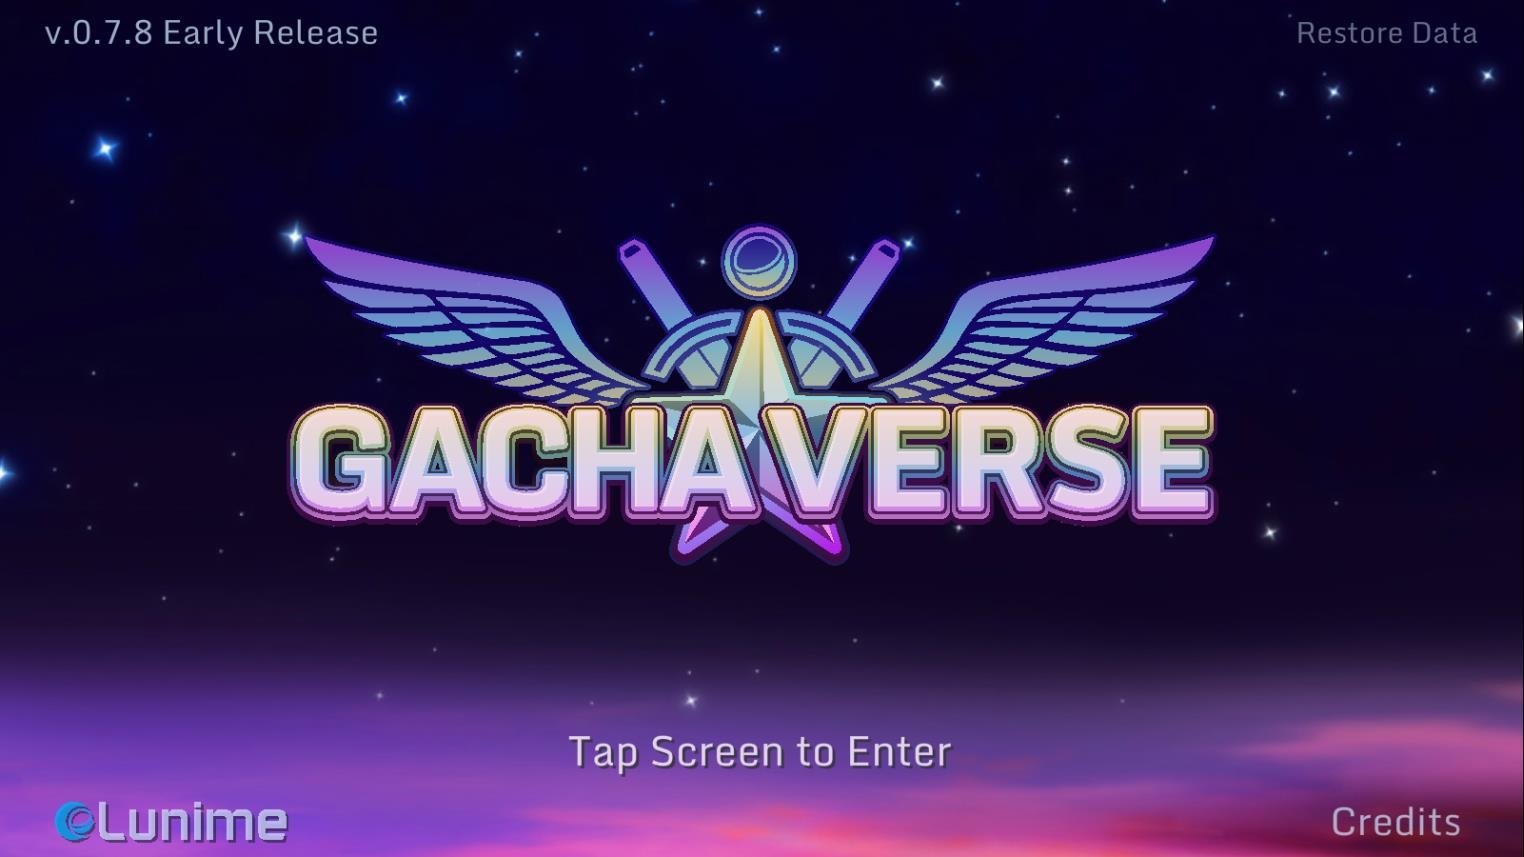 Gacha Rose] ᐈ Download (APK) For Android, PC, & iOS - Gacha Verse